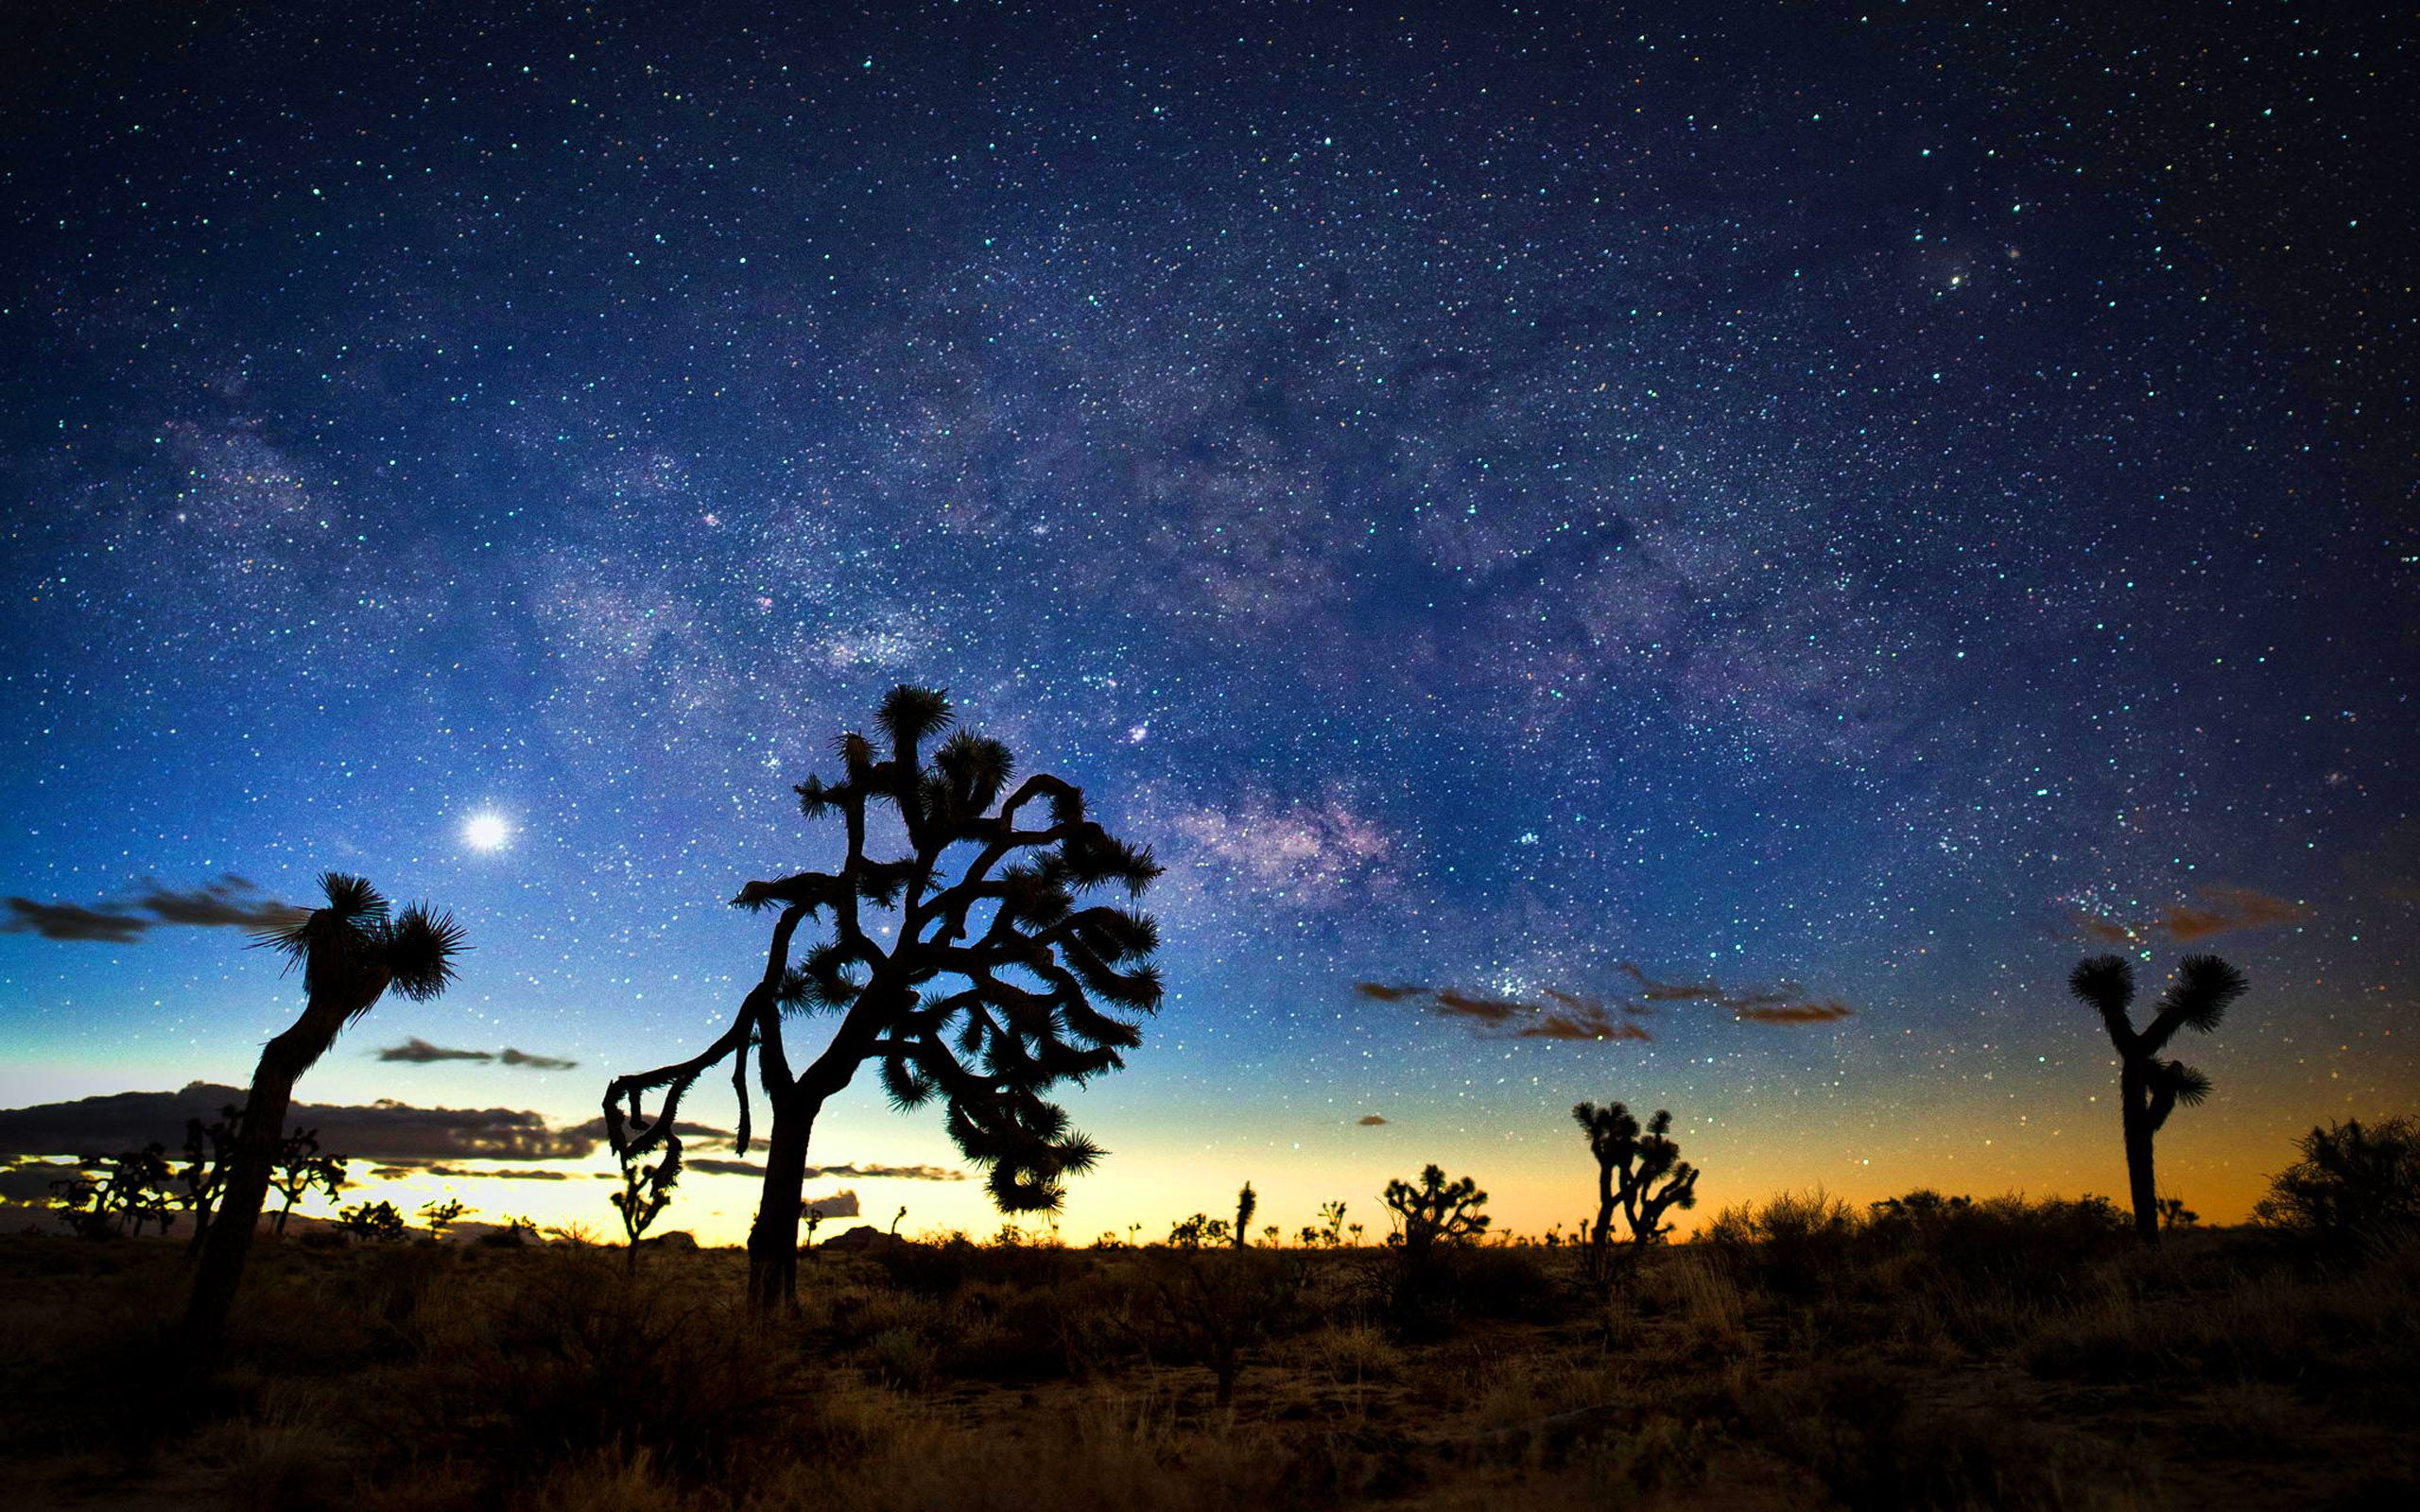 Milky Way At Night Desert Landscapes With Rocks And Cactus Joshua Tree National Park California Usa HD Wallpaper 2560x1600, Wallpaper13.com